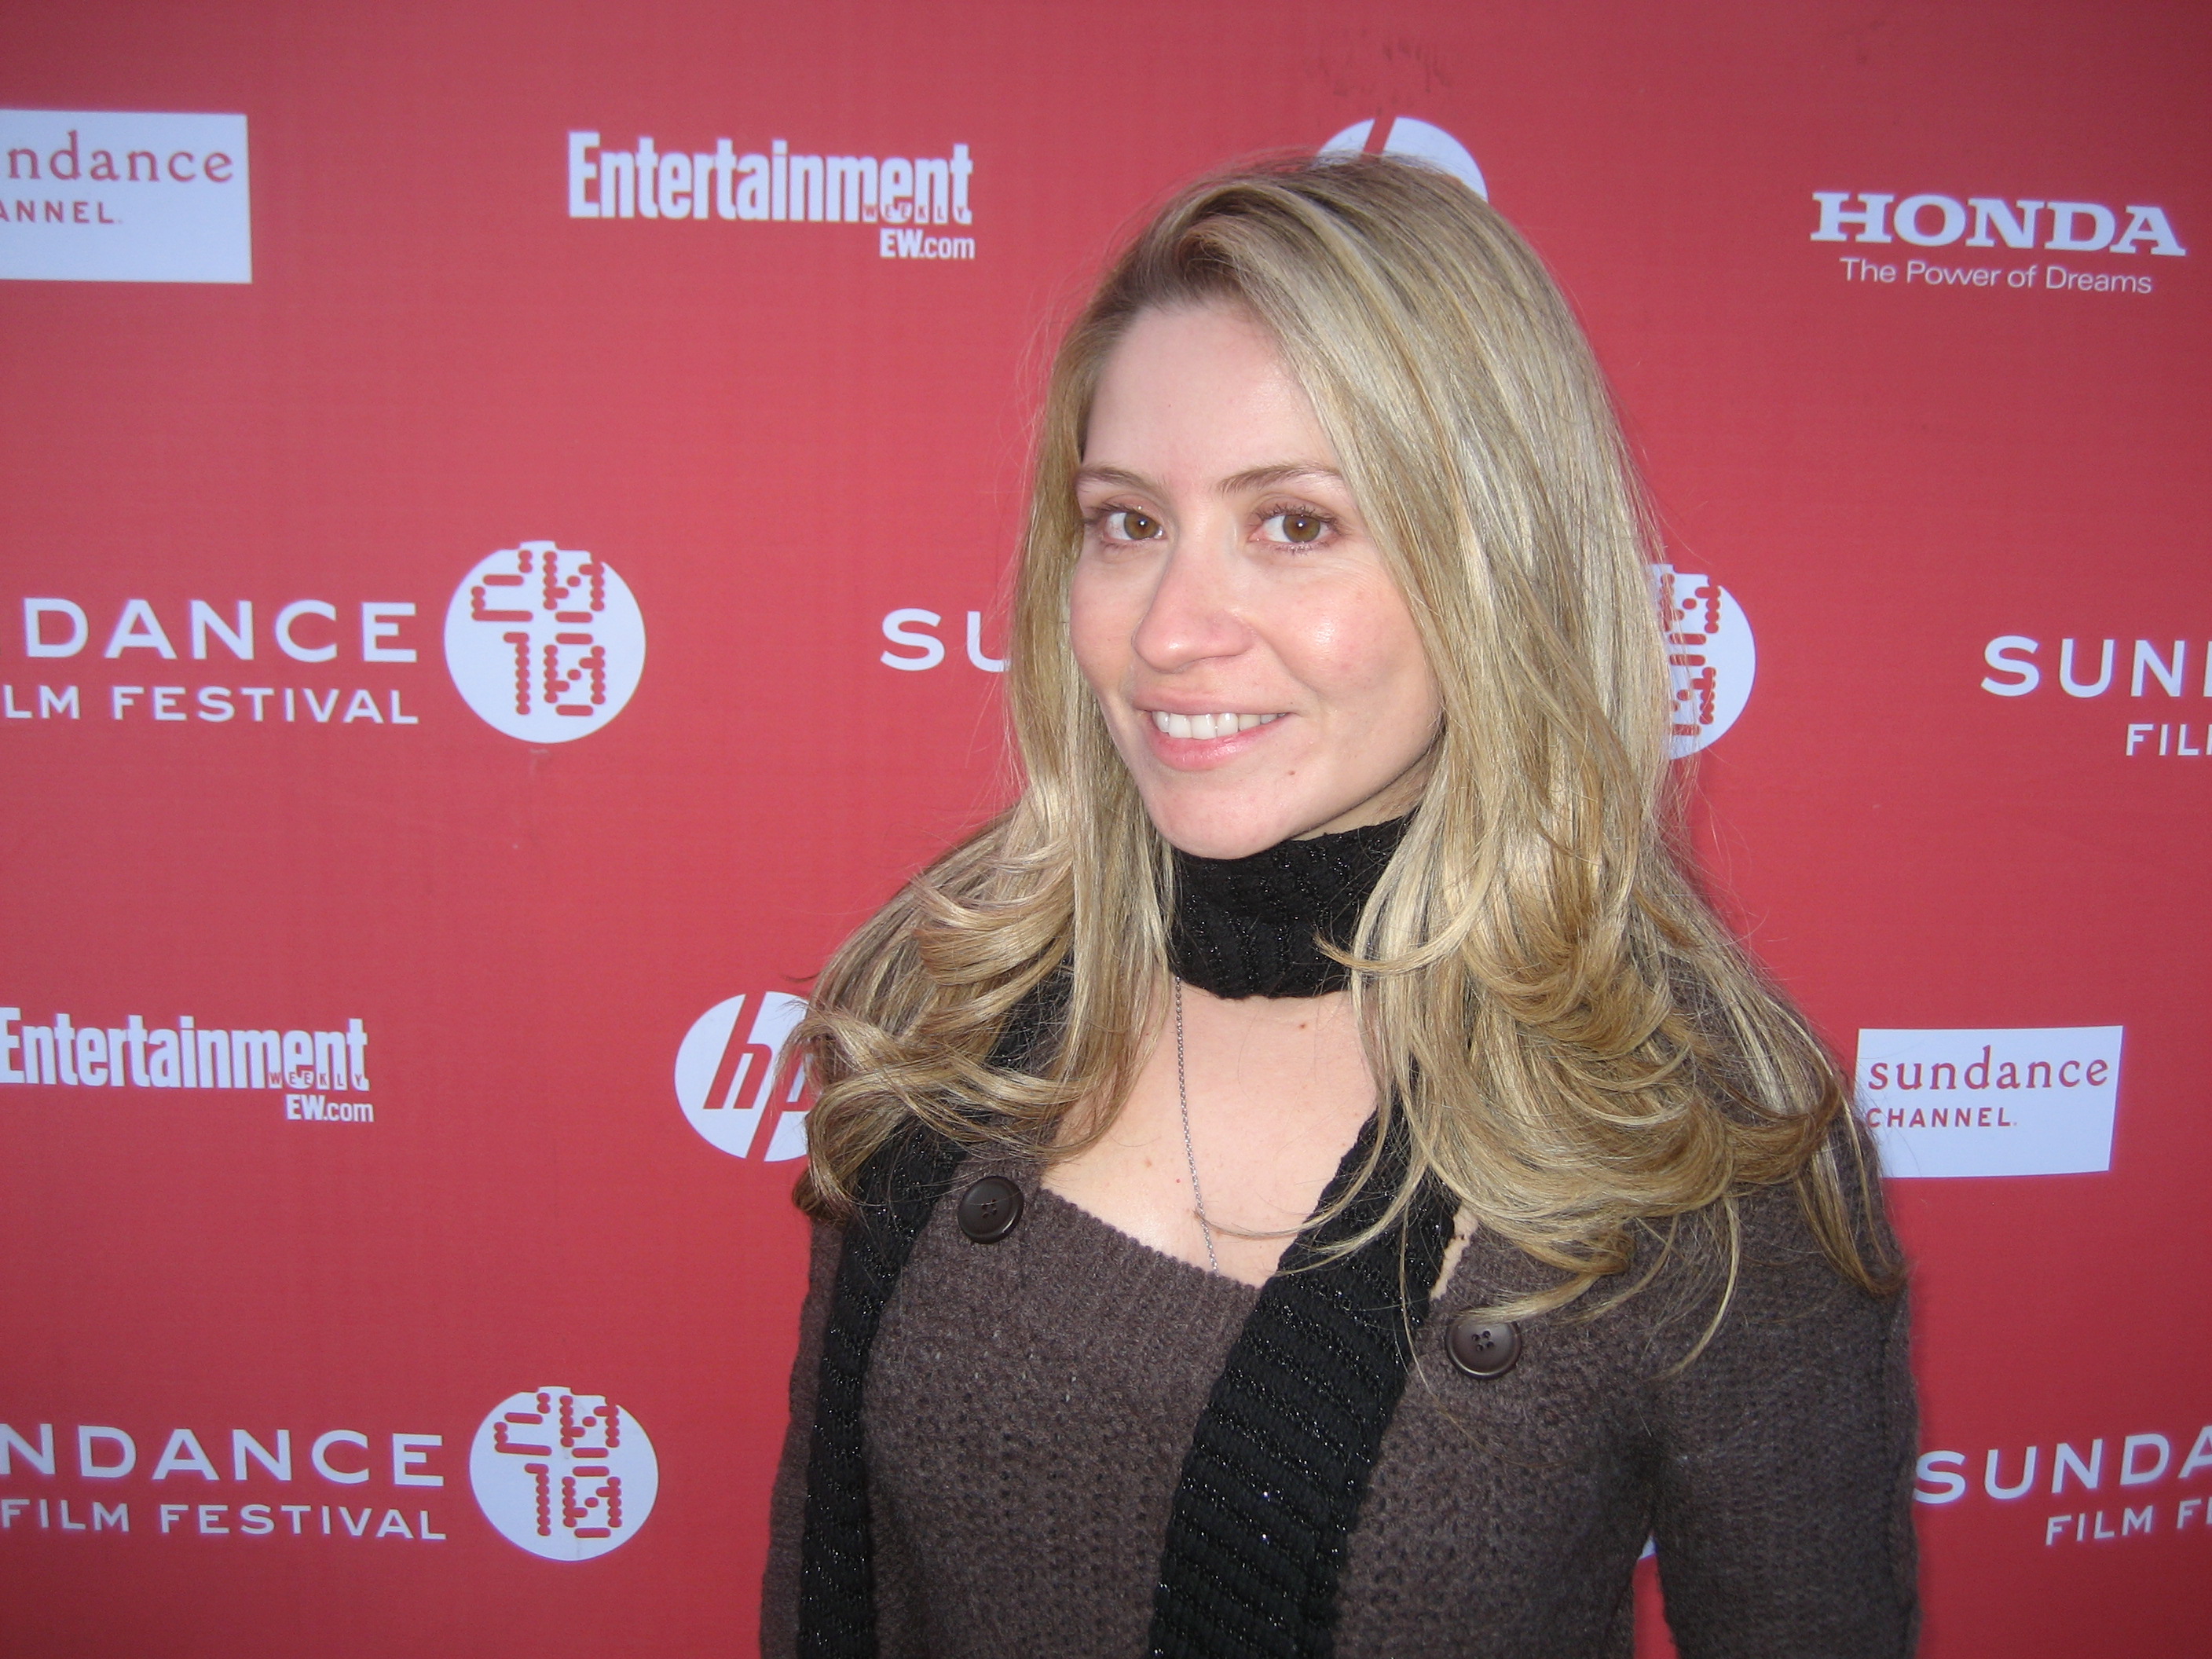 Darcyana Moreno Izel at The Sundance Film Festival 2010.